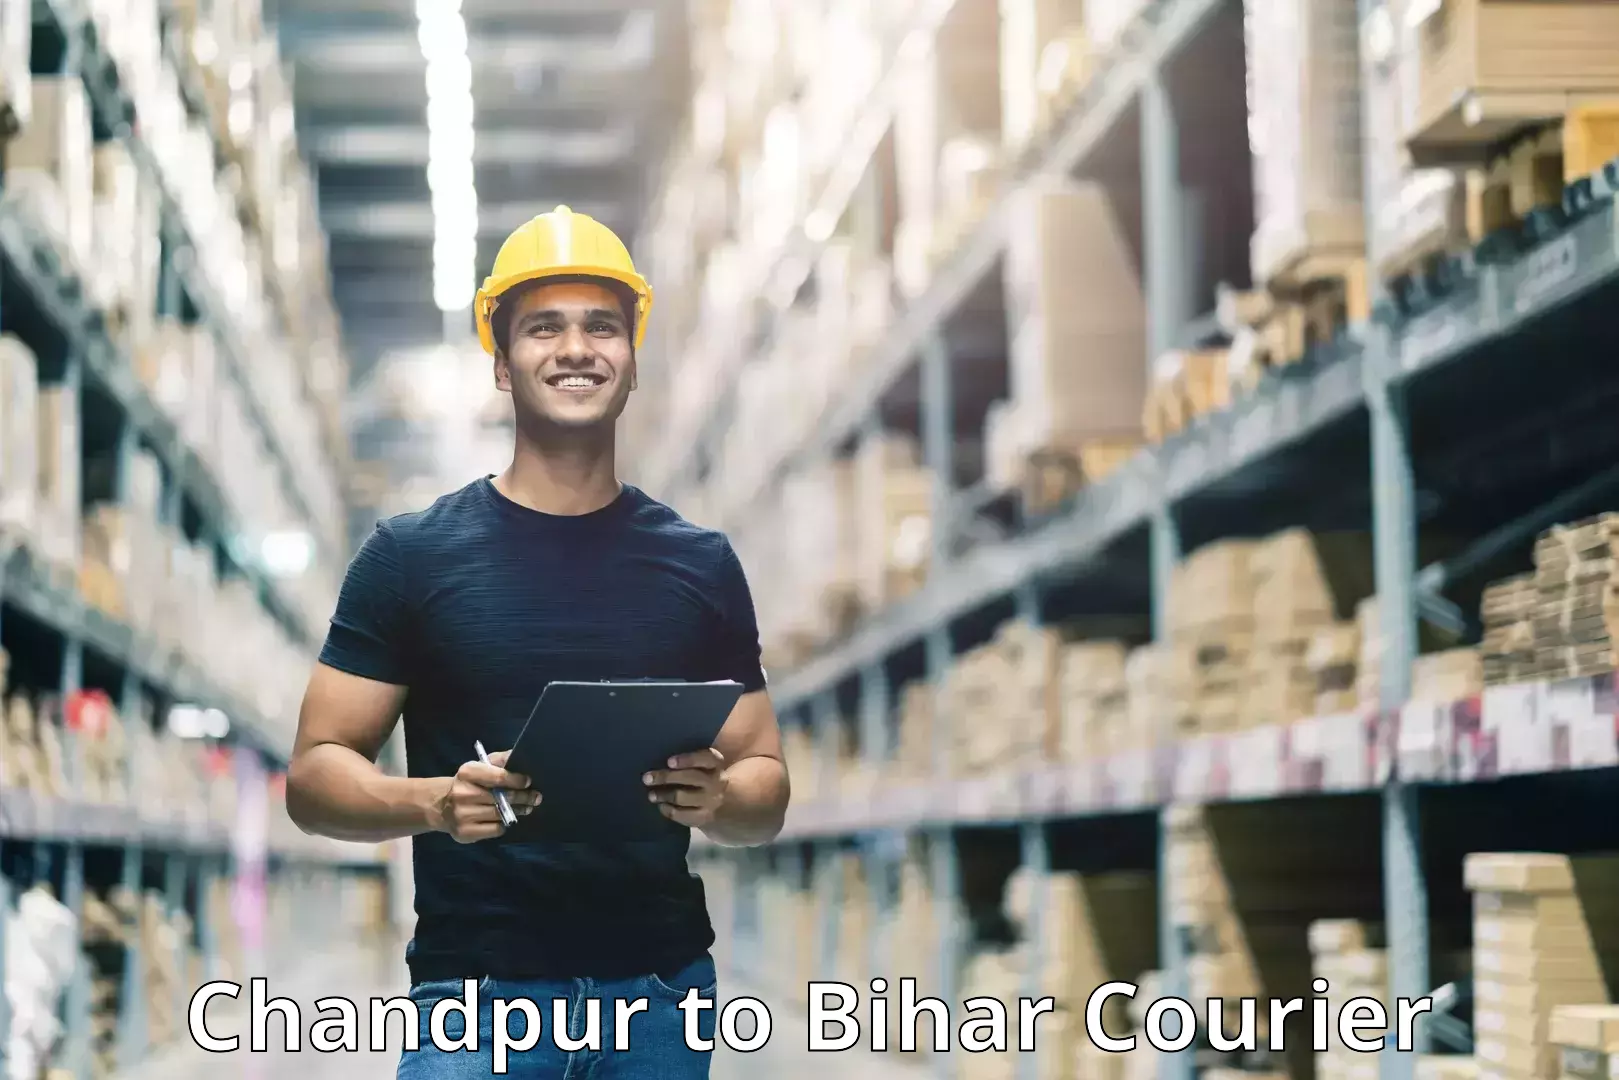 Global shipping networks Chandpur to Bihar